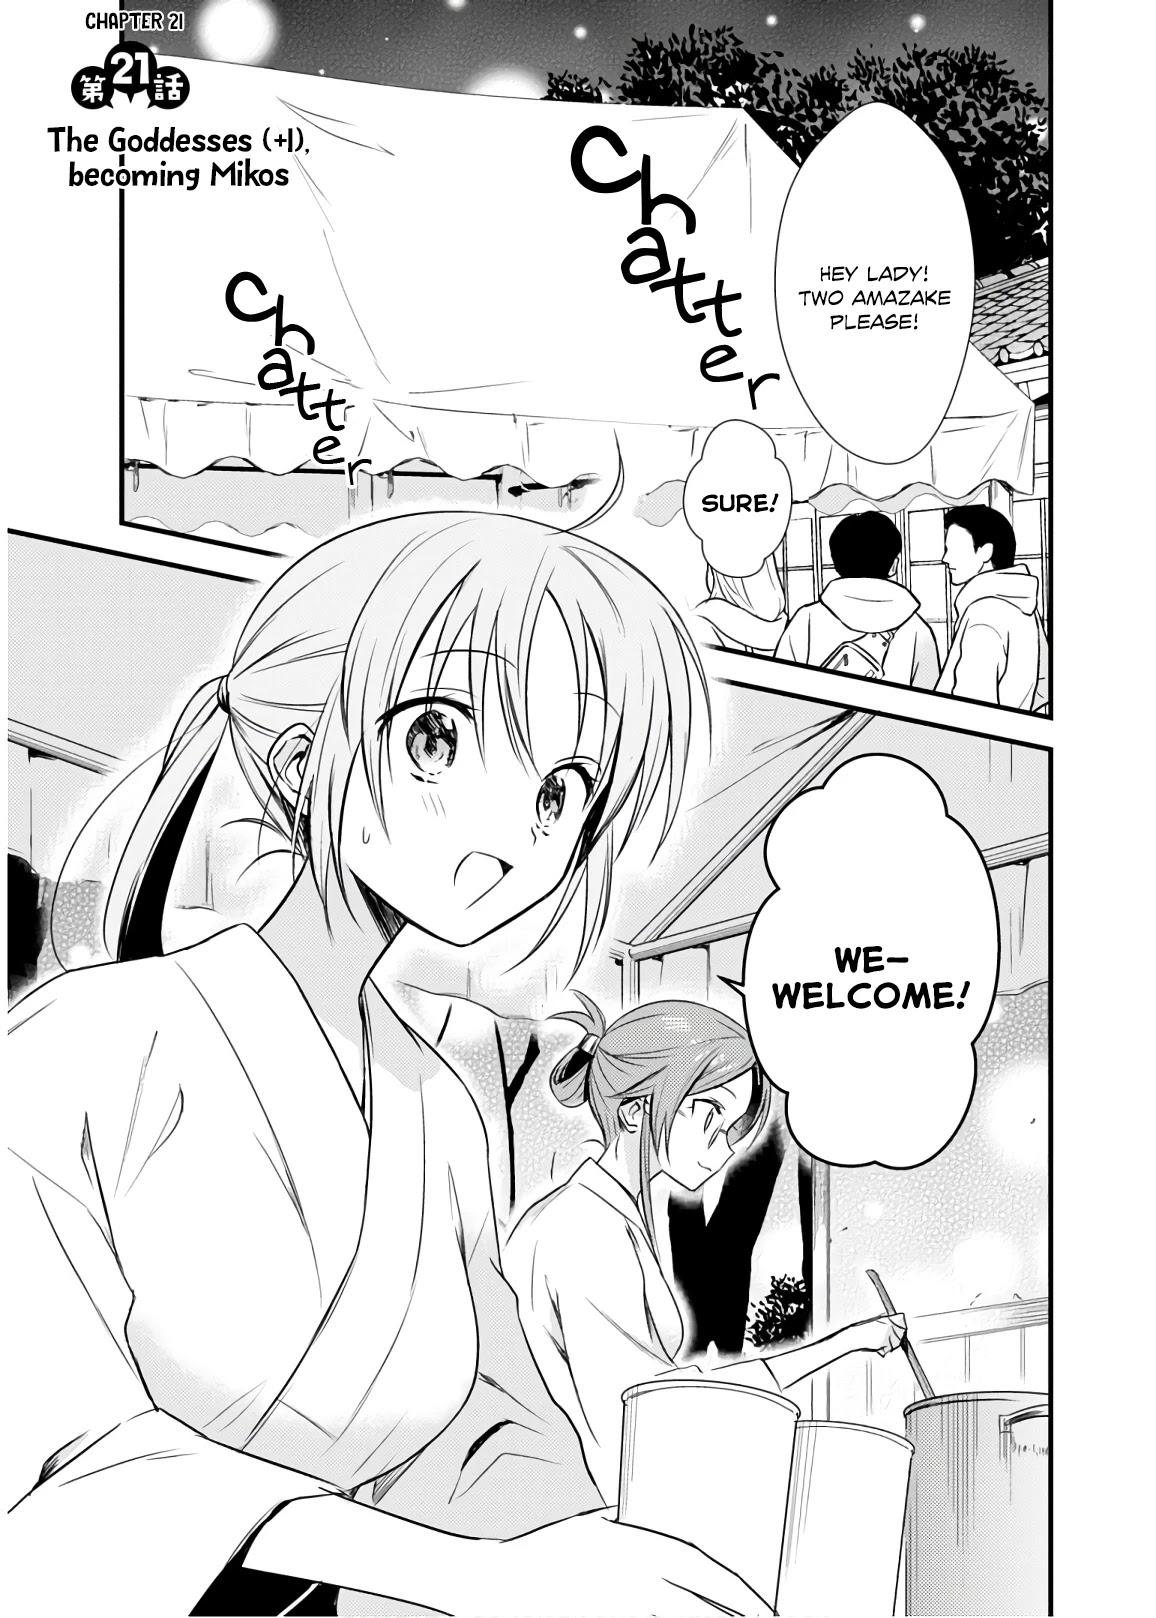 Megami-ryou no Ryoubo-kun. Capítulo 19 - Manga Online